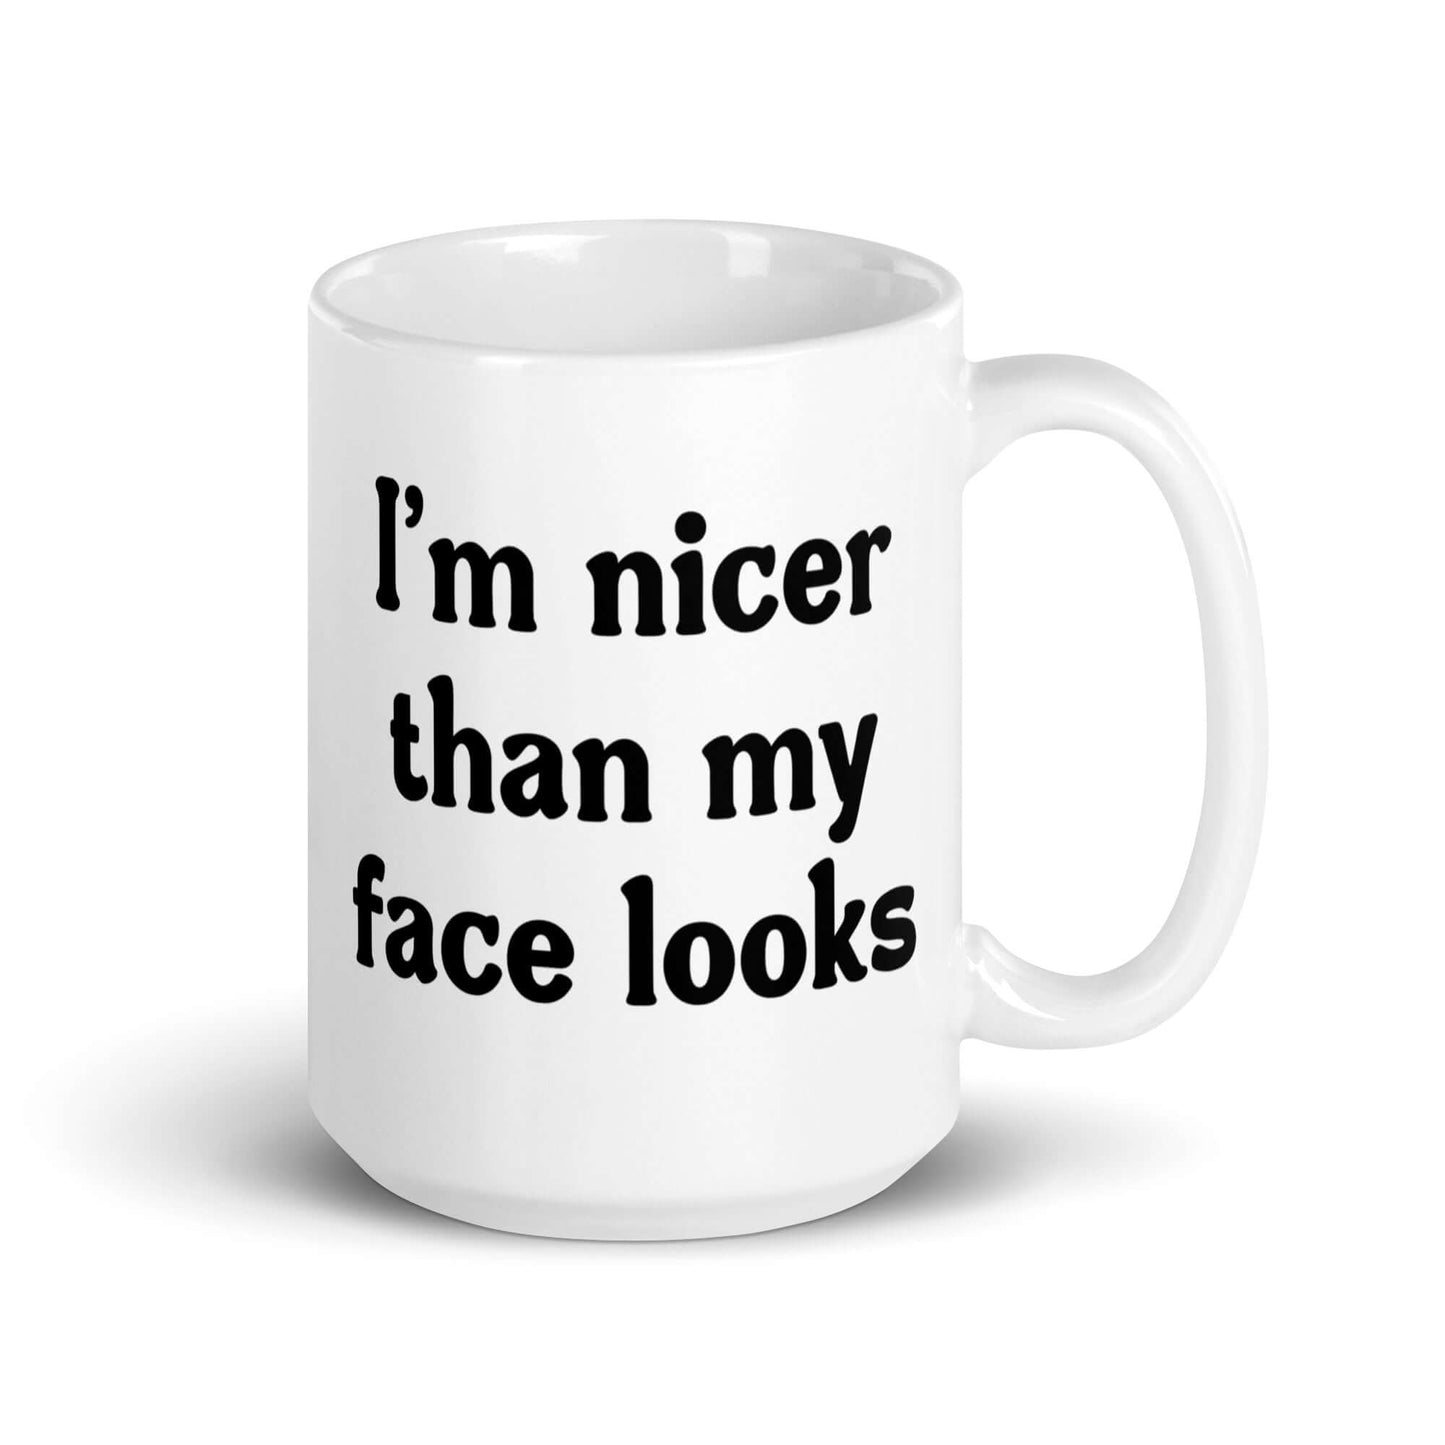 I'm nicer than my face looks ceramic coffee mug